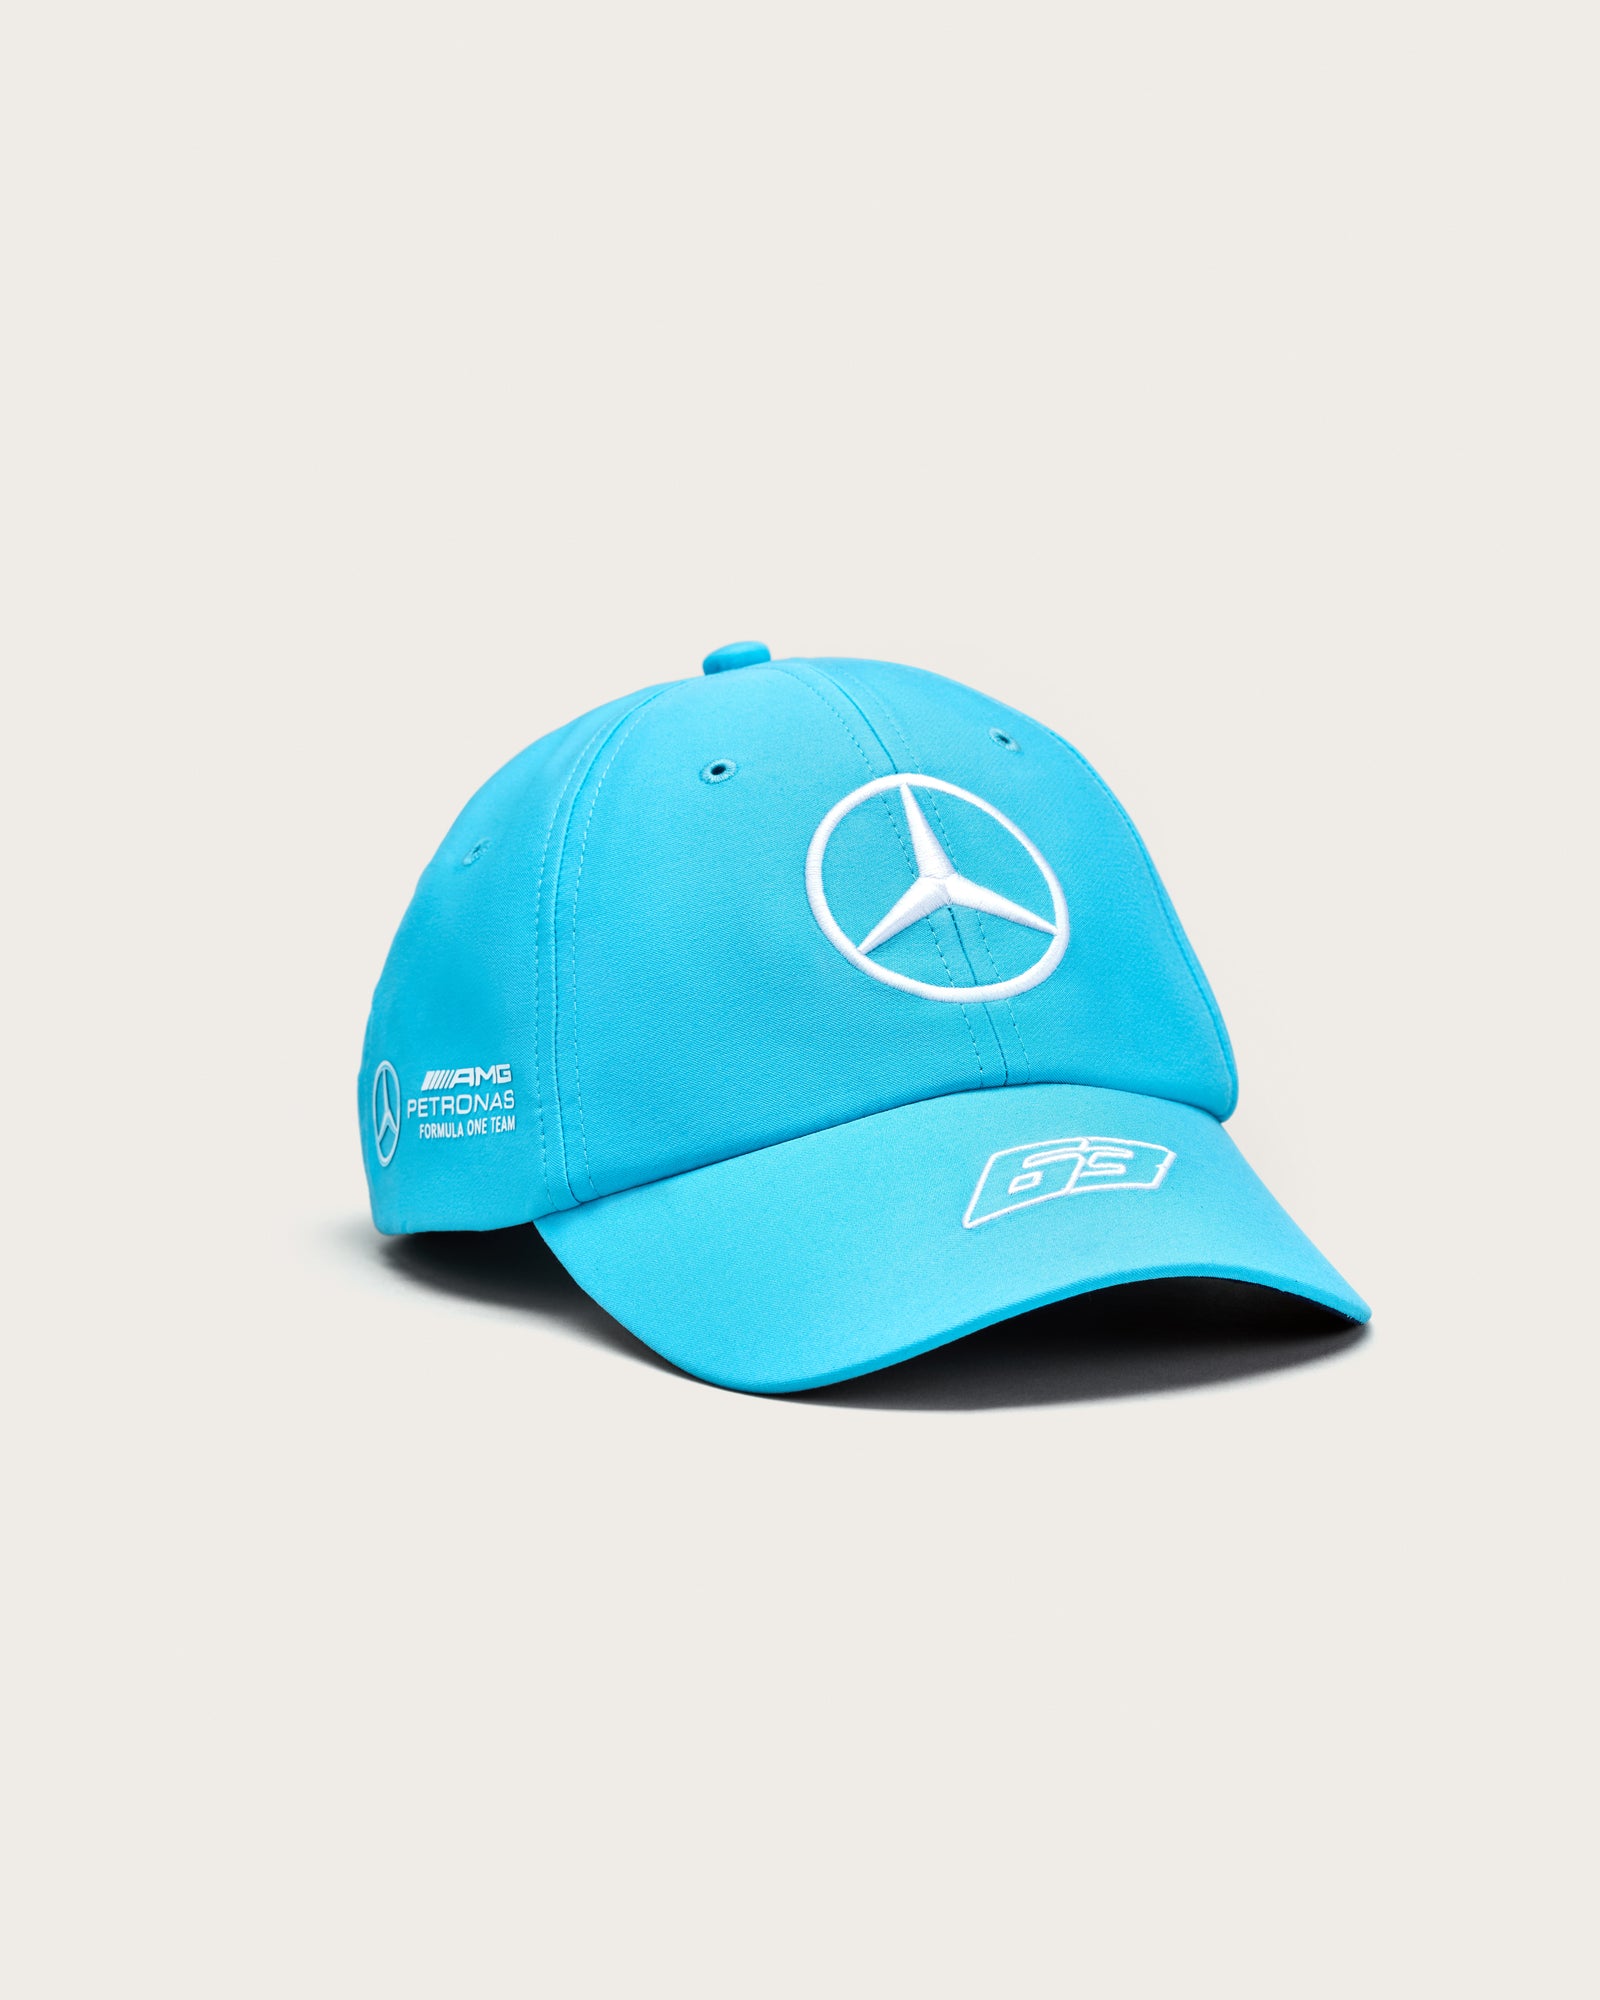 Mercedes F1 Team Merchandise Official Mercedes-AMG | F1 Store